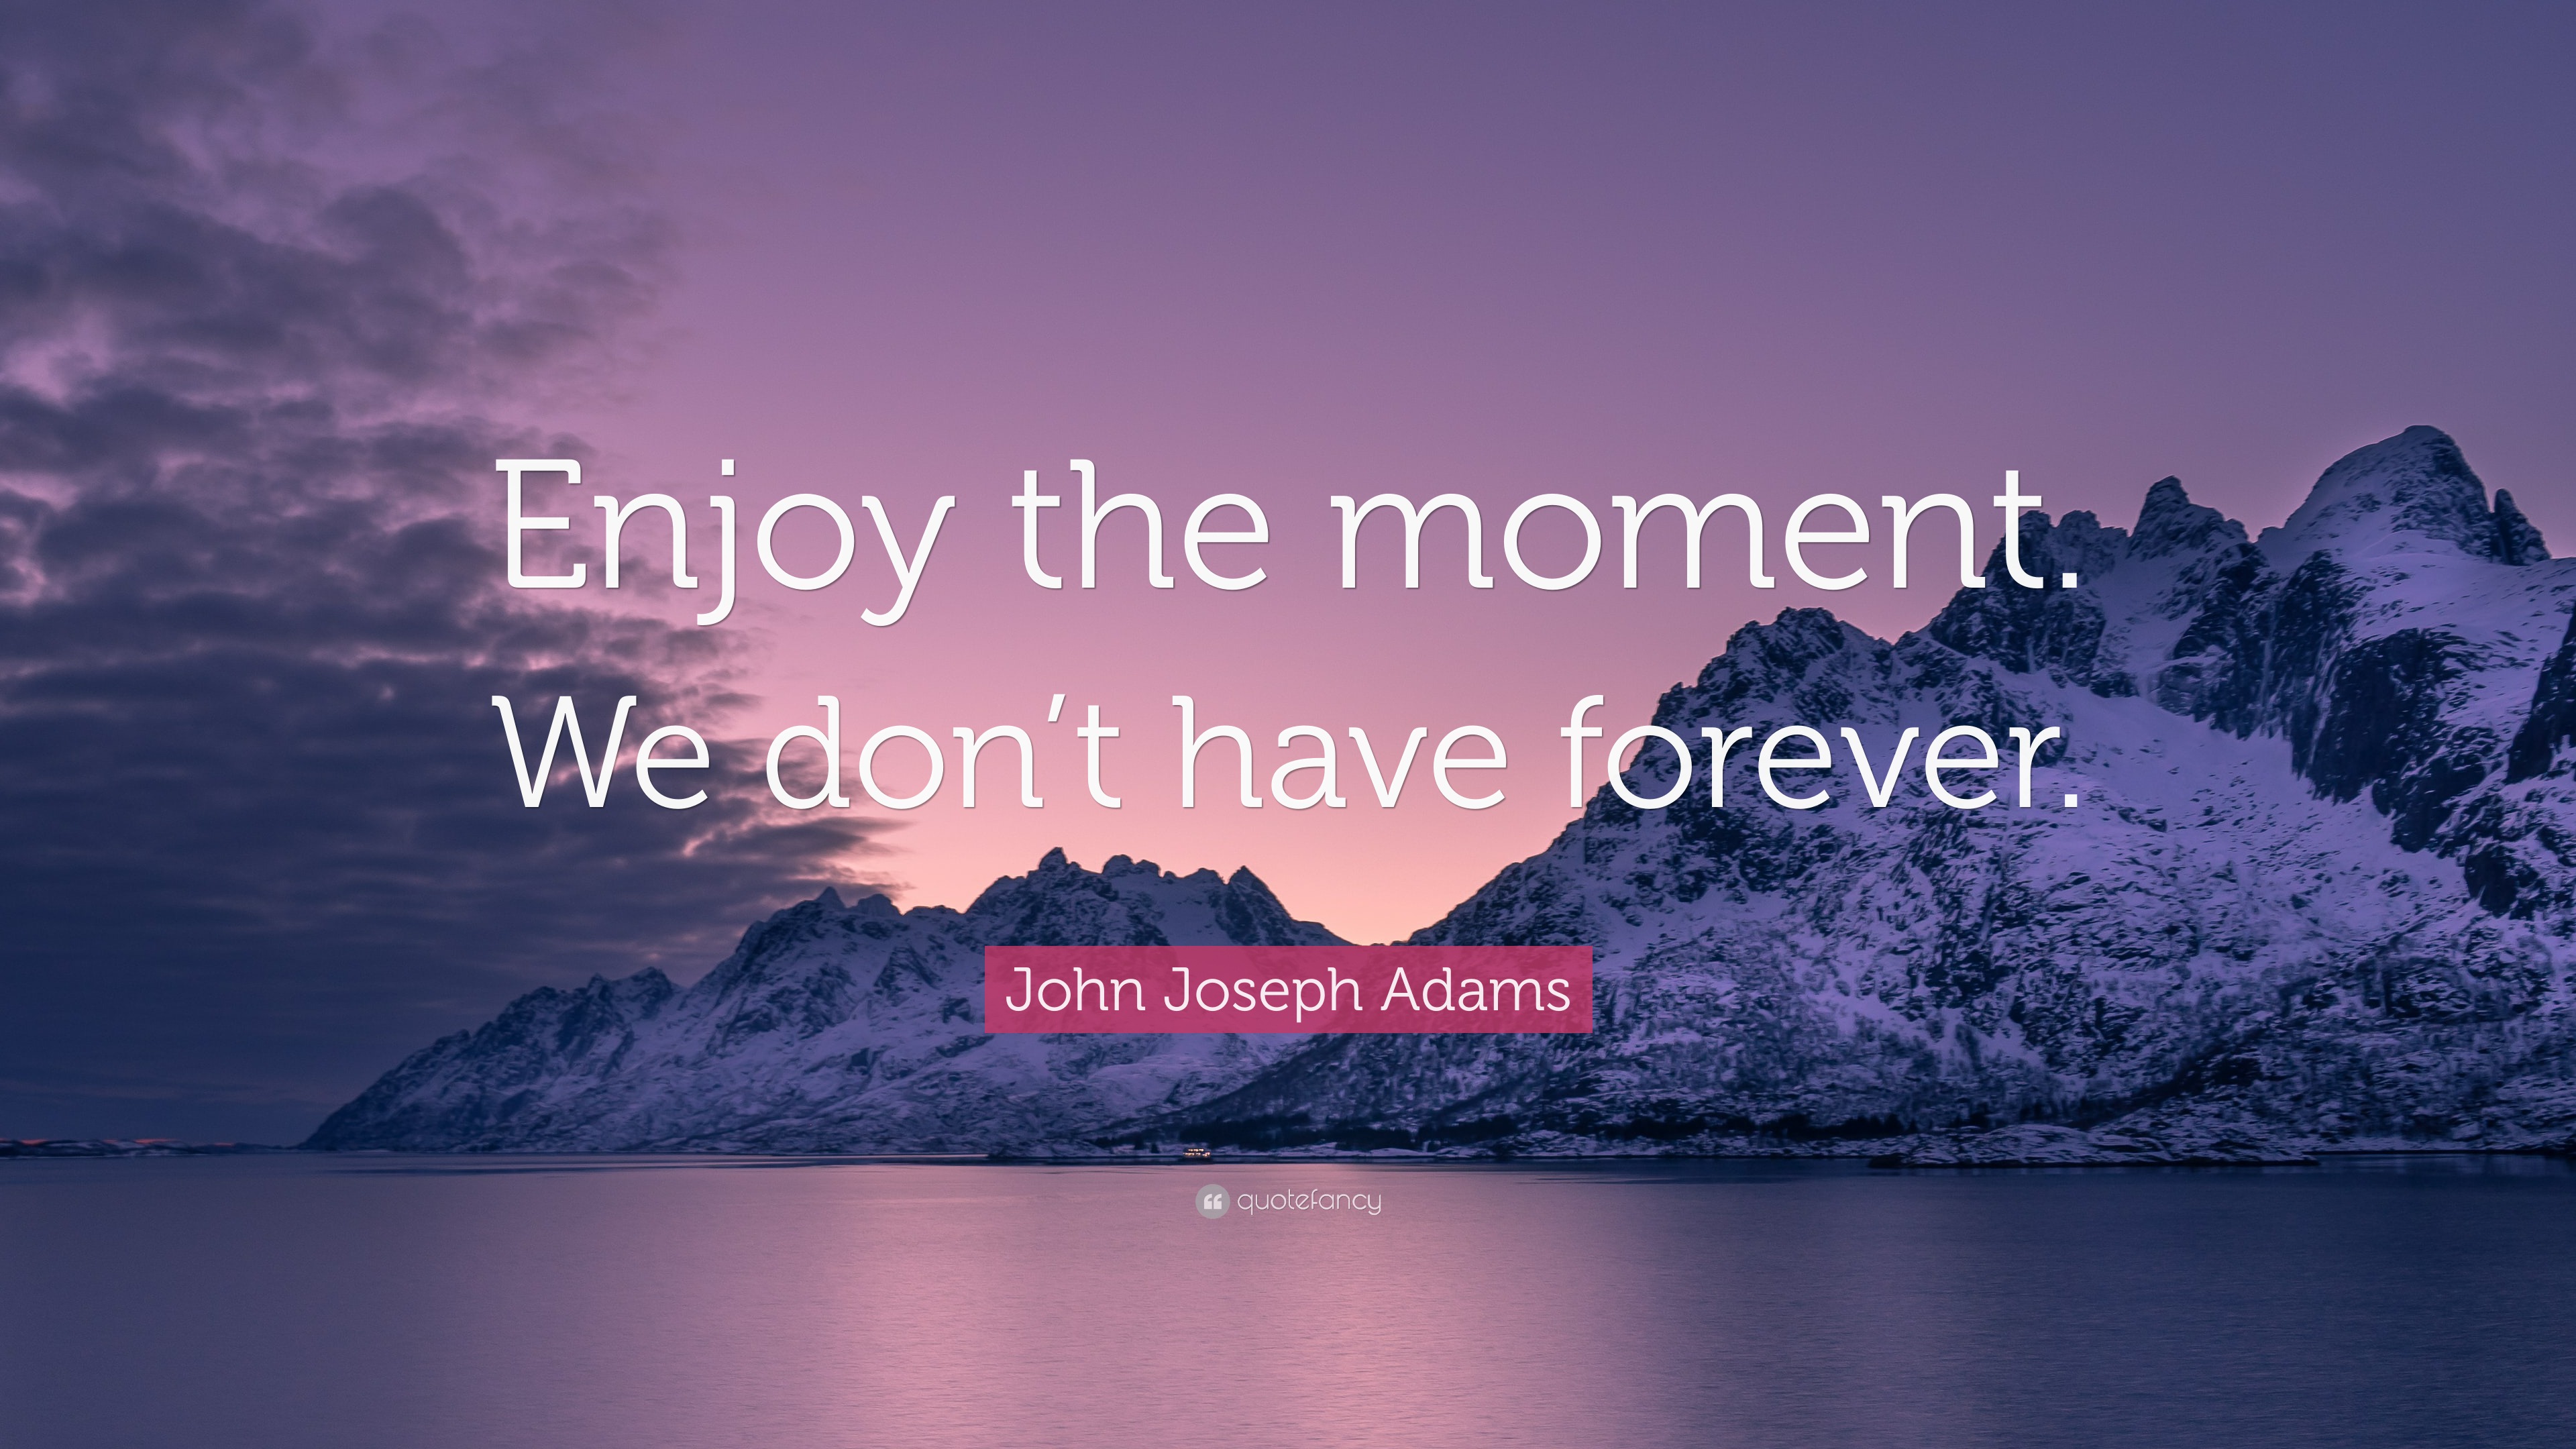 Do you enjoy “the” moment?